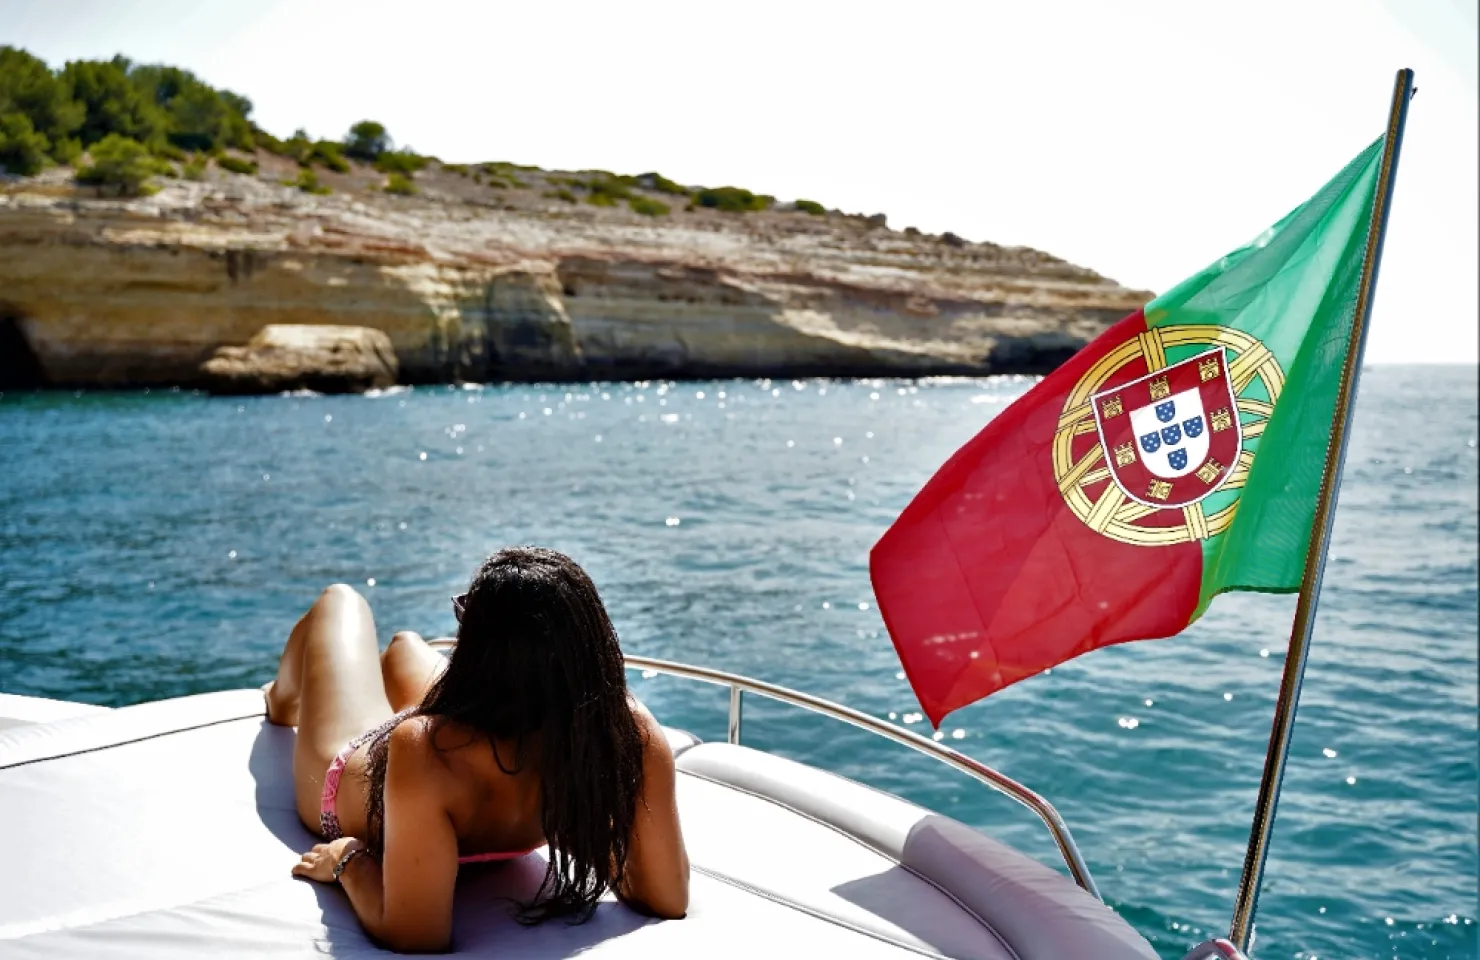 Full Day Luxury Yacht Charter - Vilamoura Boat Trip